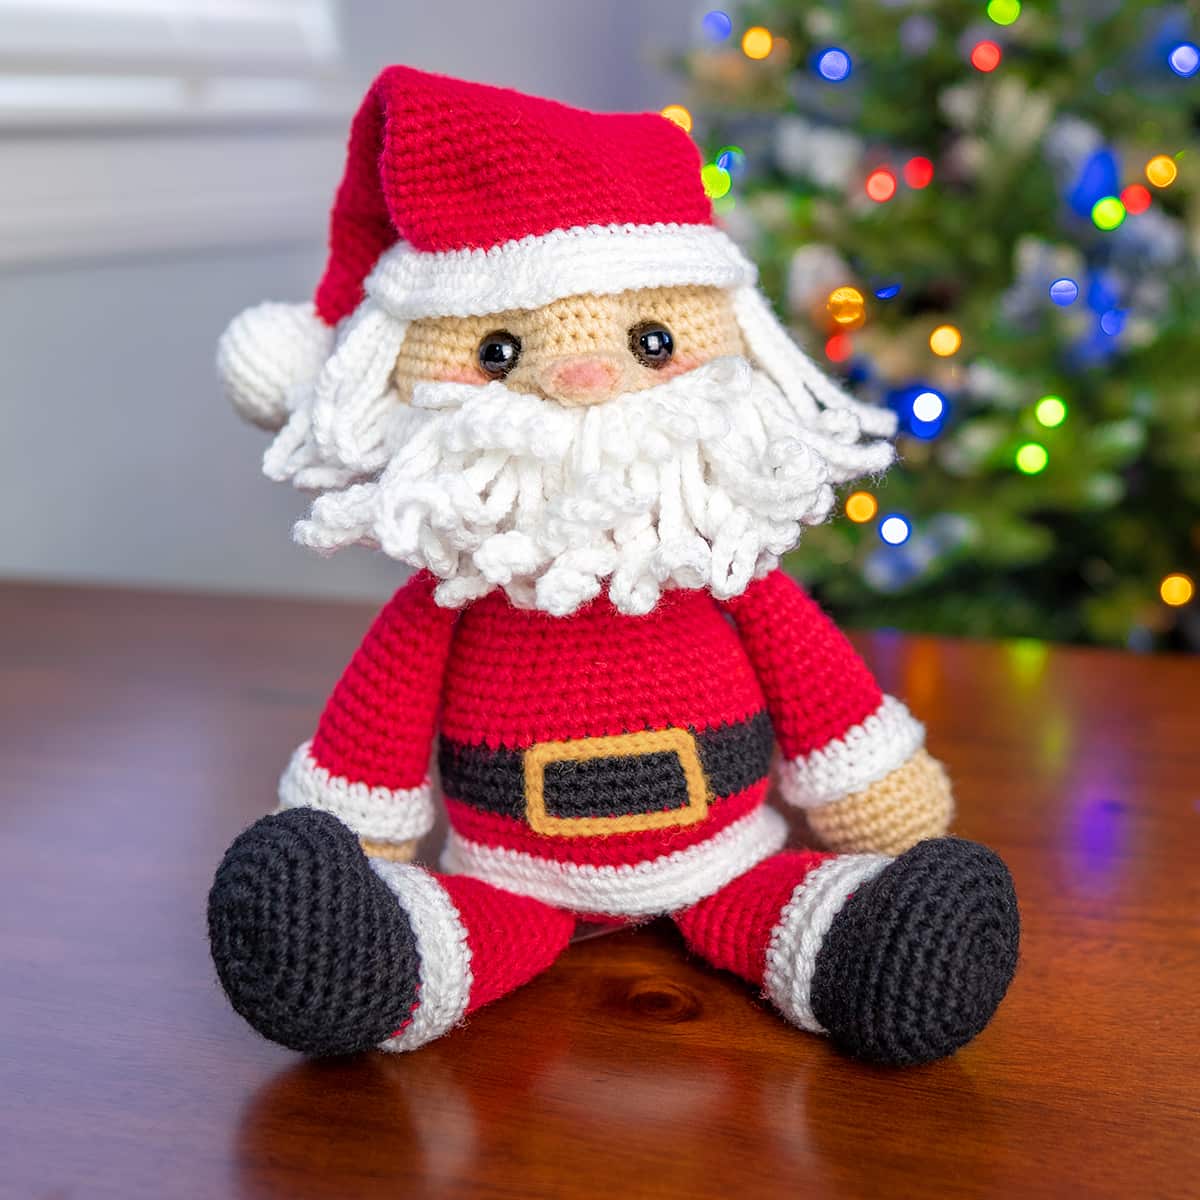 Santa Claus Amigurumi Crochet Pattern Free